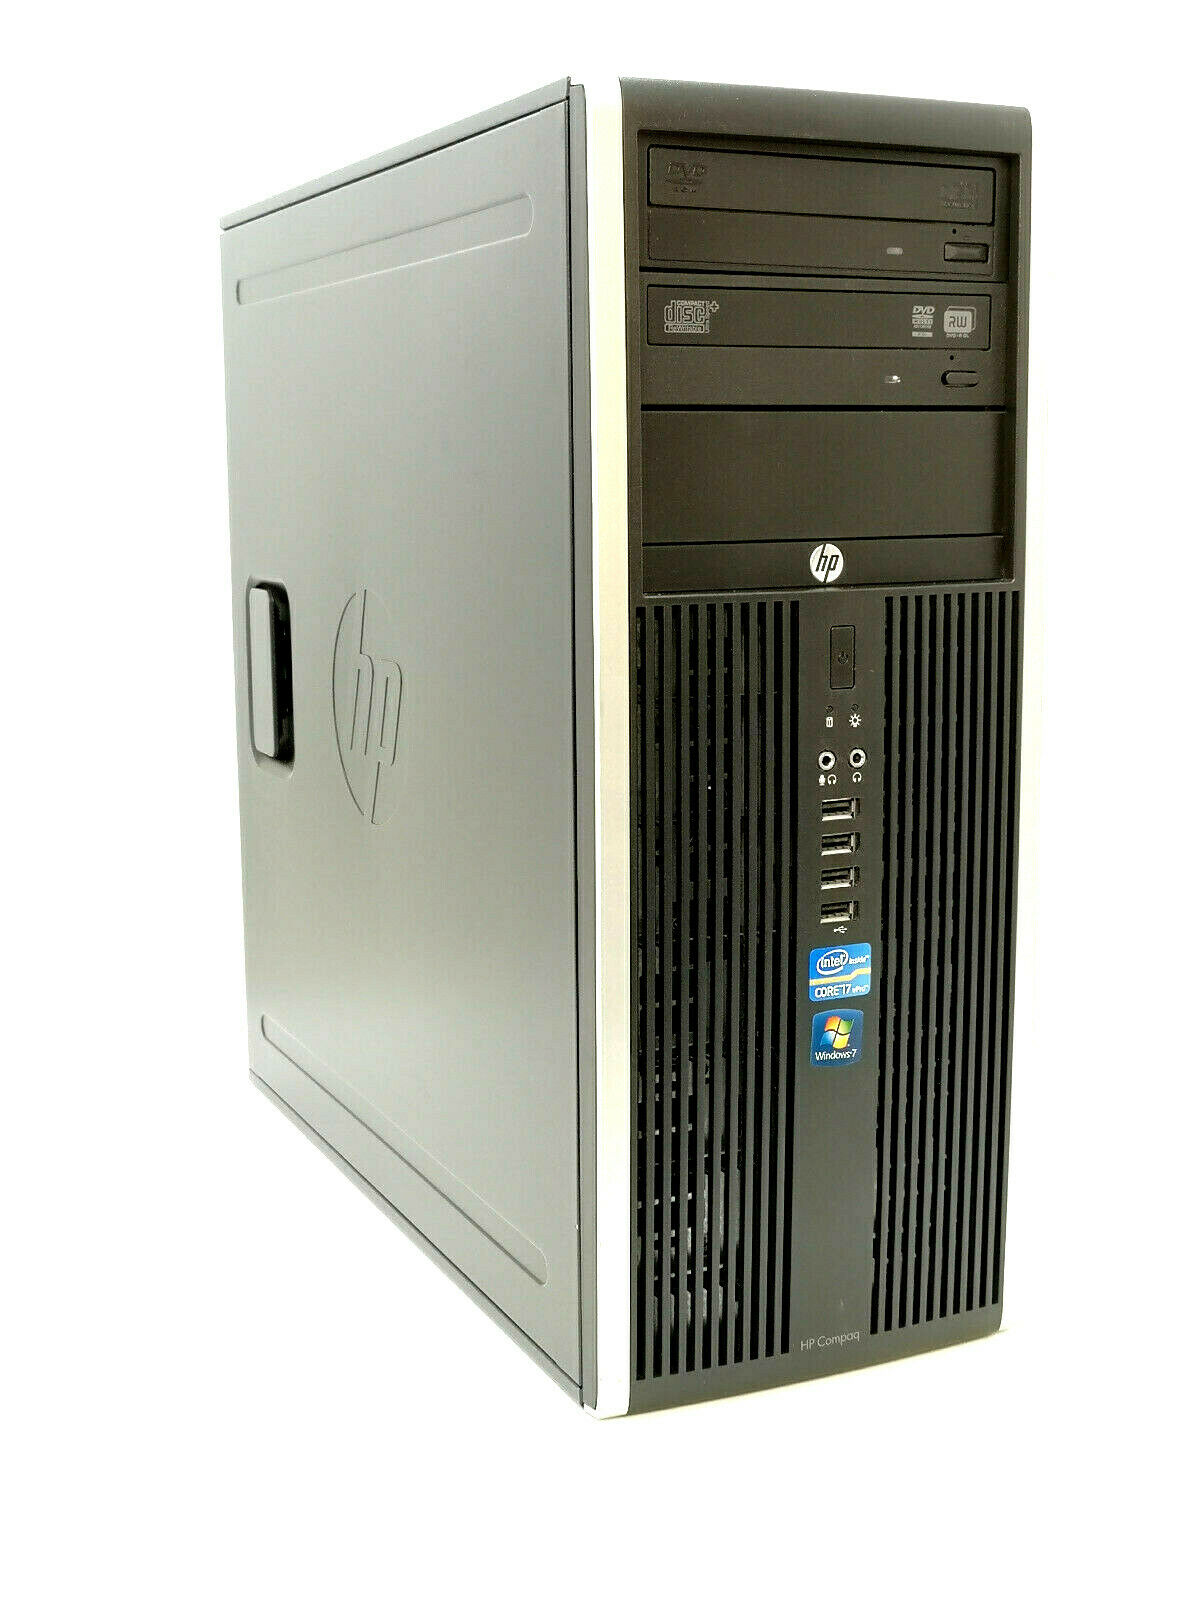 Refurbished HP 8200 Elite Desktop Tower PC